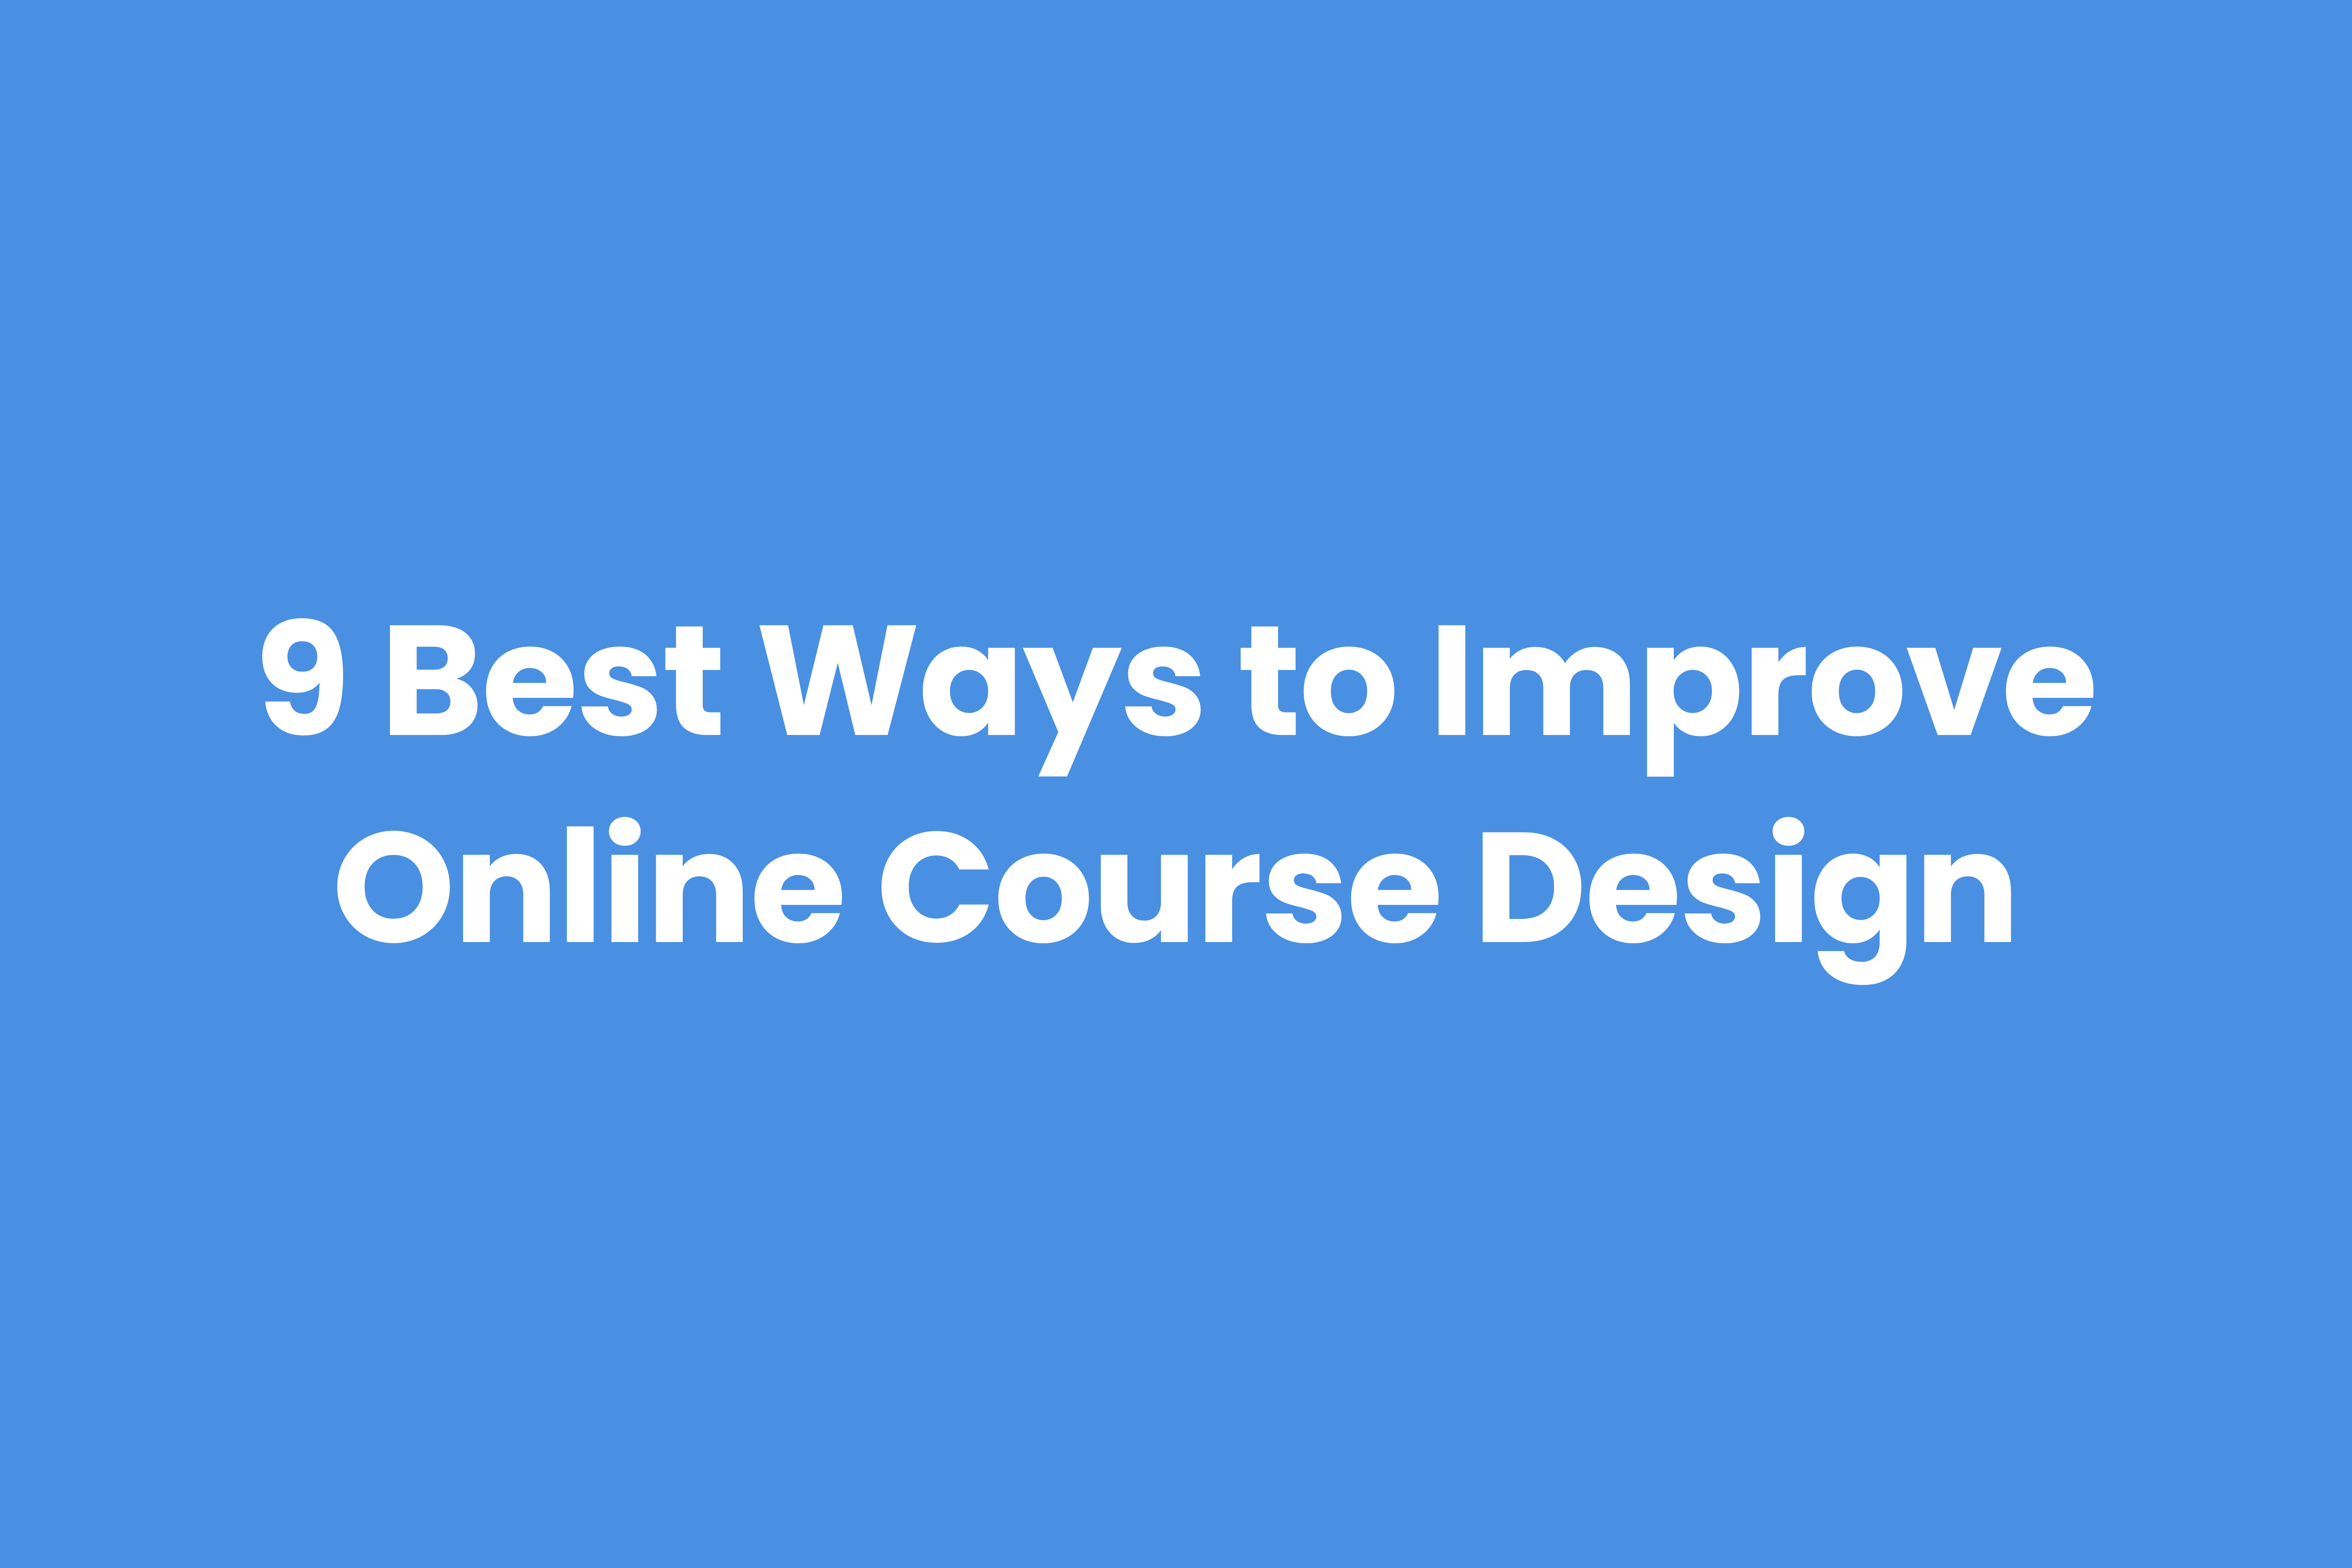 List of nine ways to improve online course design